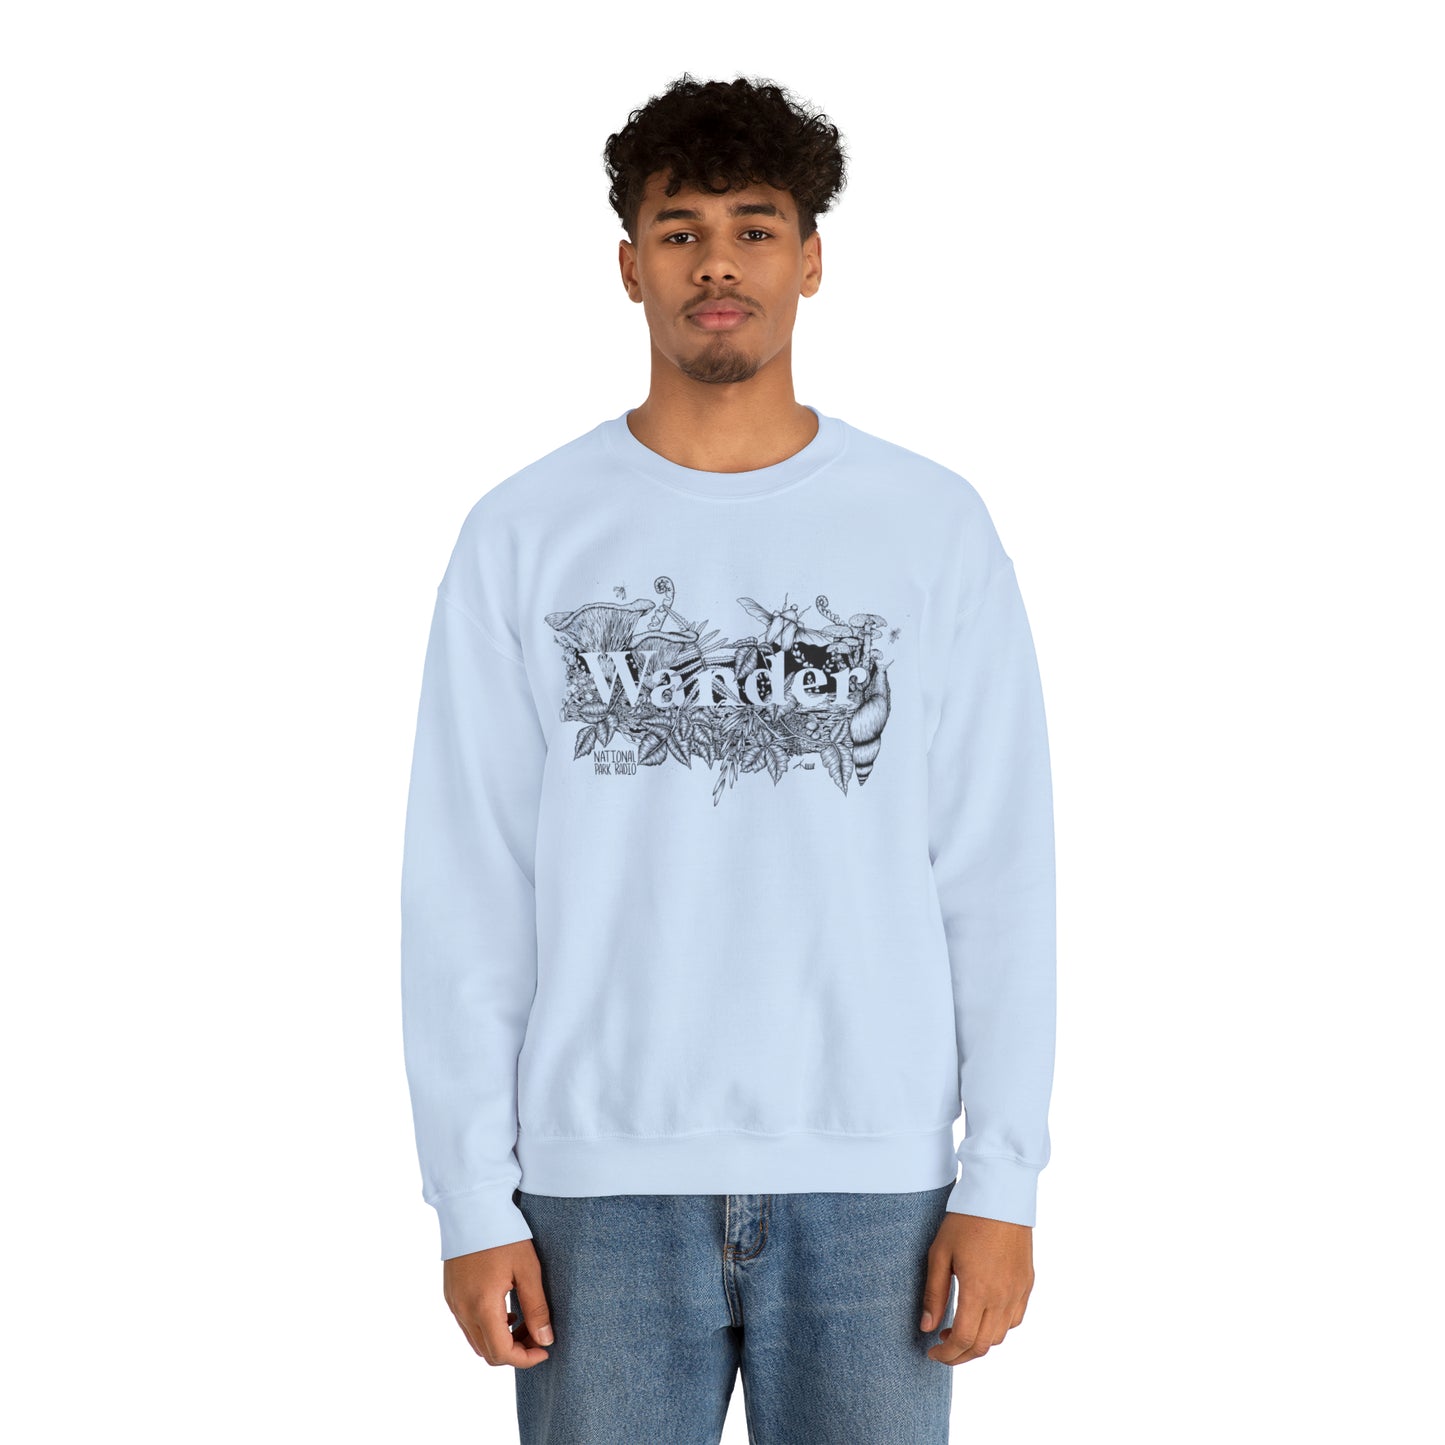 Wander Crewneck Sweatshirt